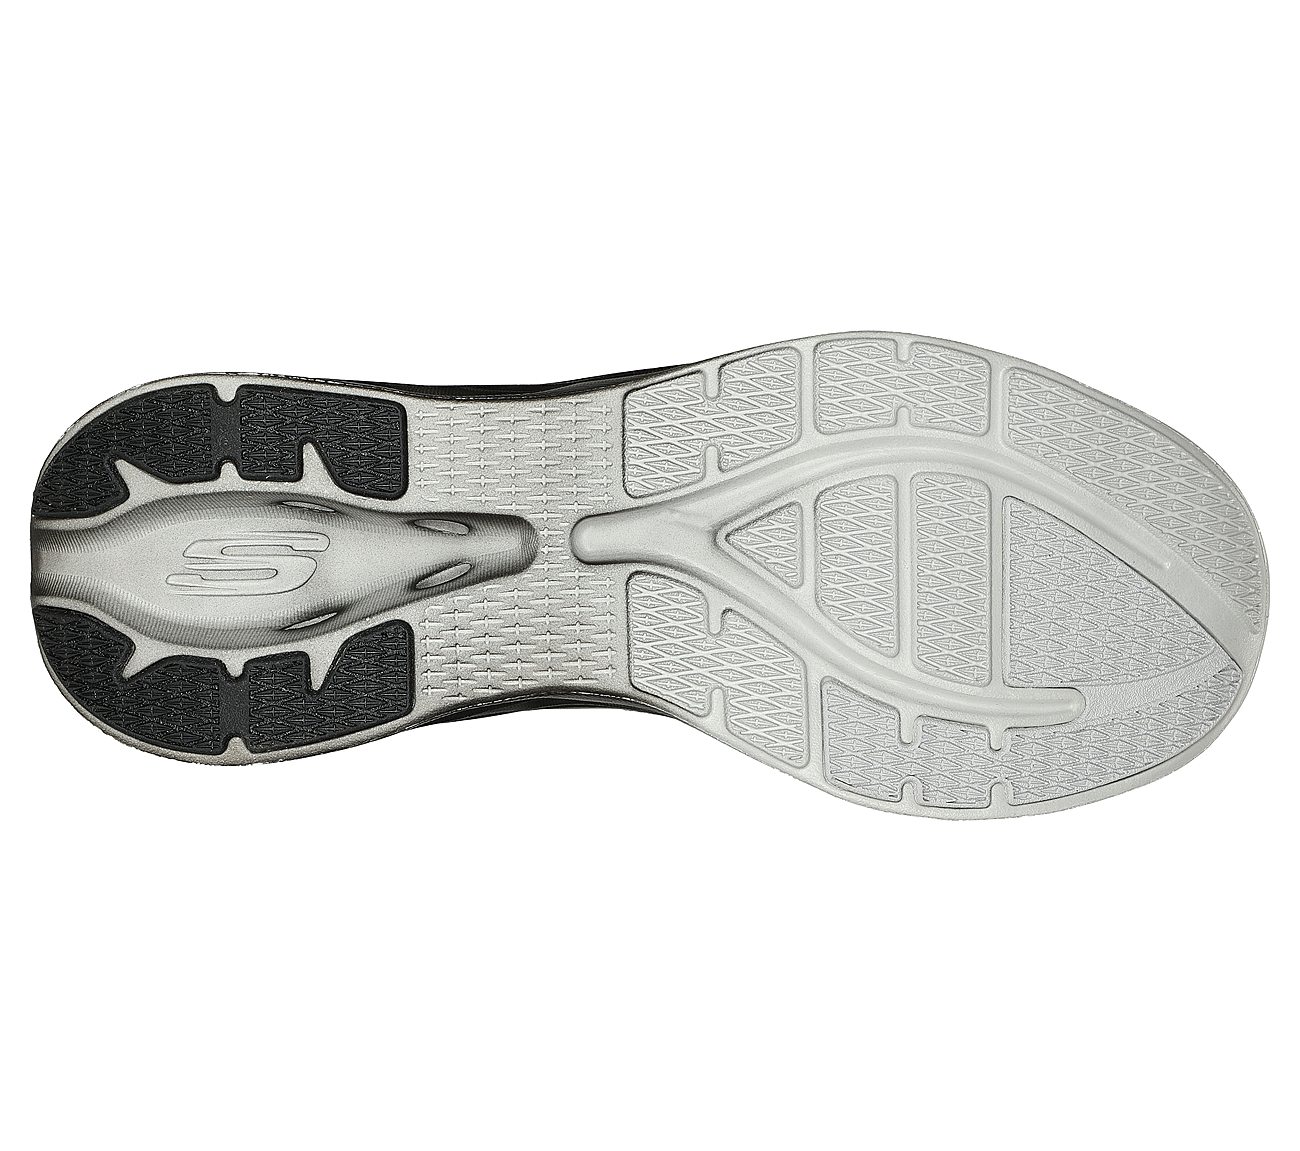 GLIDE-STEP SWIFT, BBBBLACK Footwear Bottom View